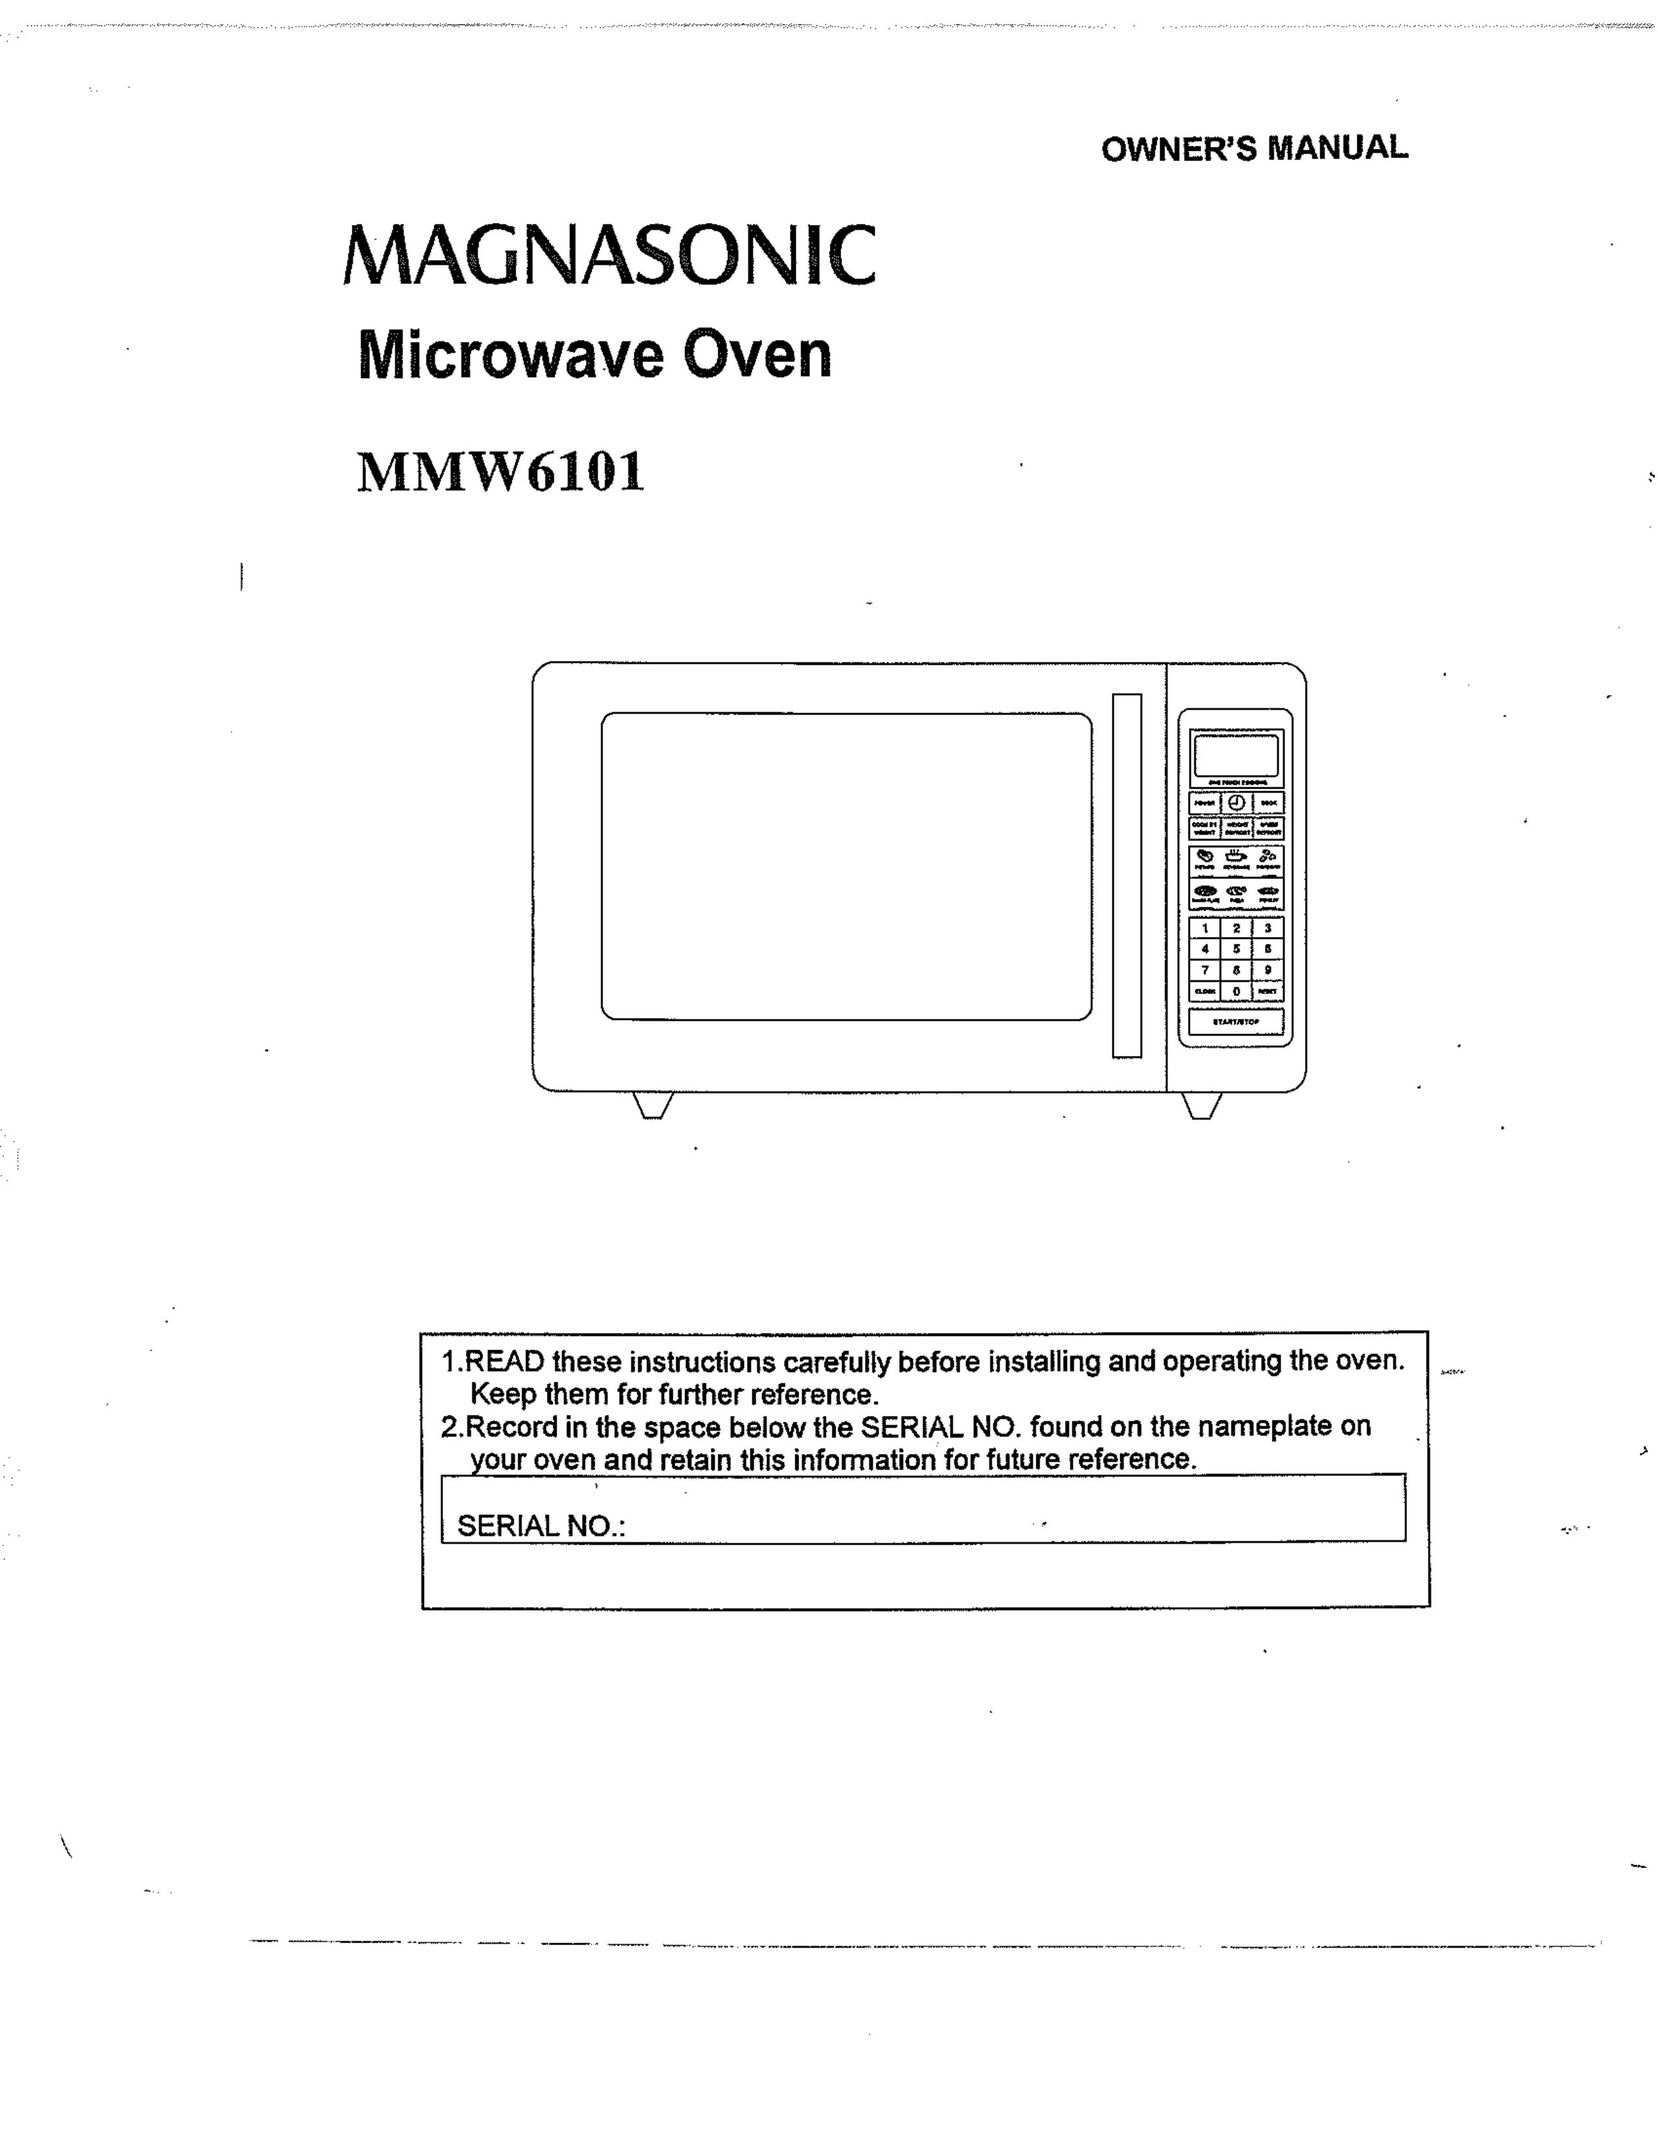 Magnasonic MMW6101 Microwave Oven User Manual